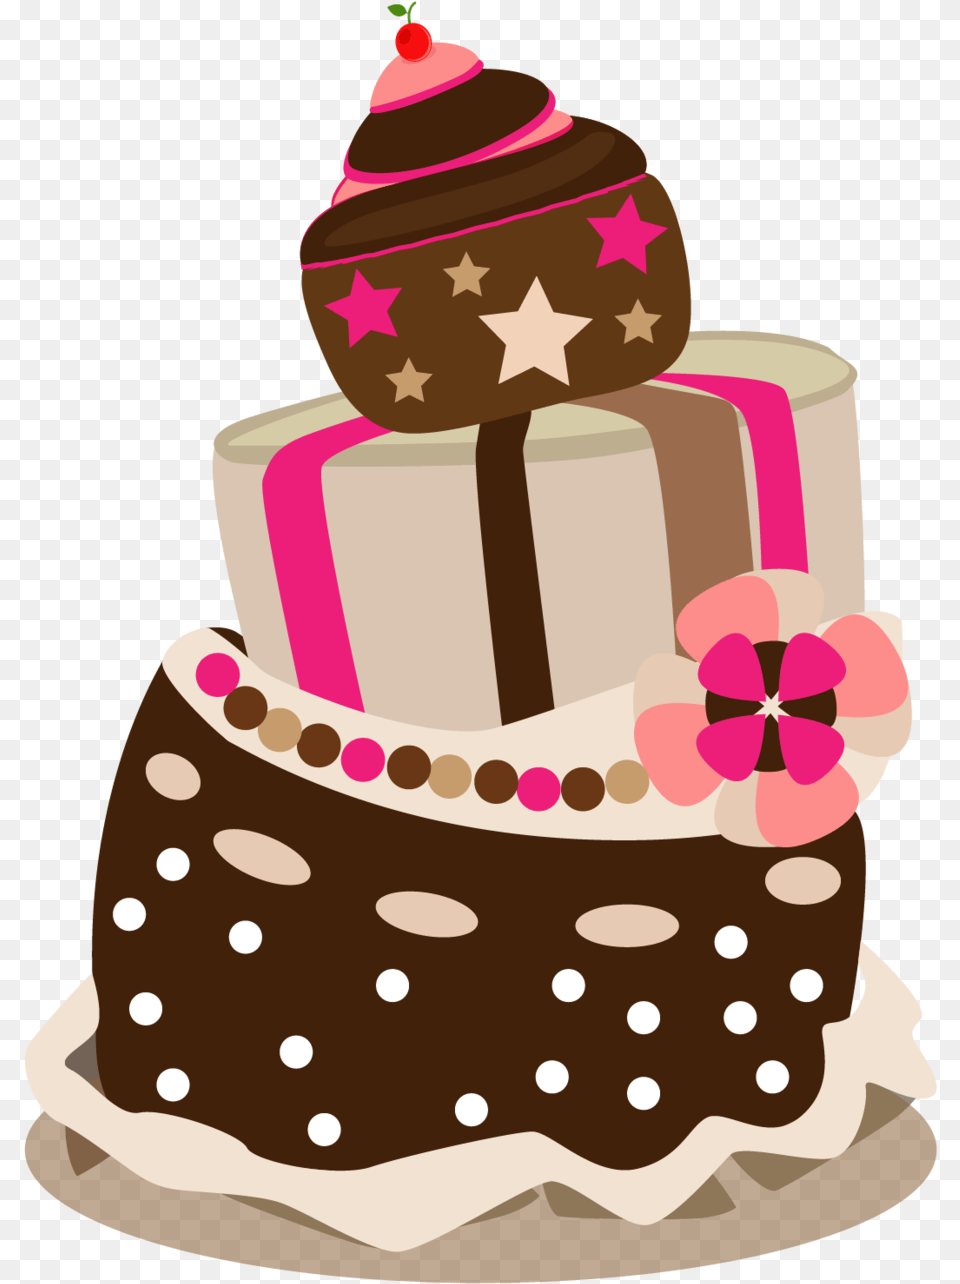 Freevector Vector Birthday Cake Vector Birthday Cake, Birthday Cake, Cream, Dessert, Food Png Image